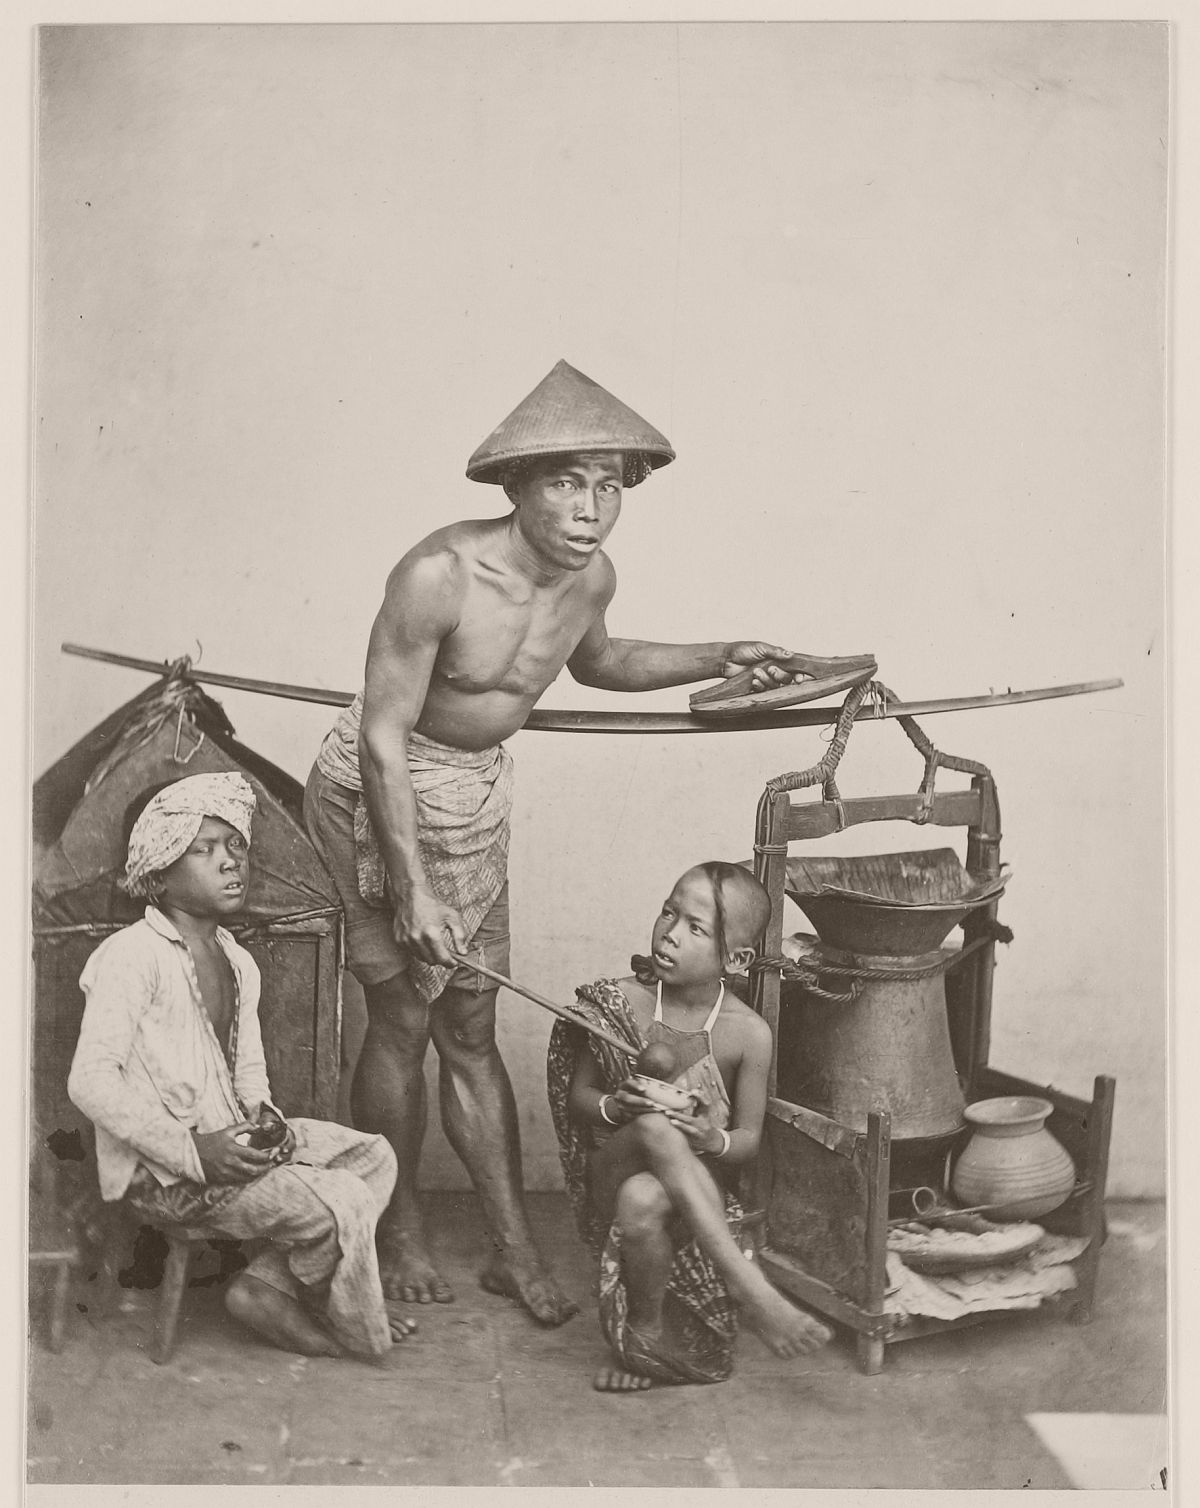 Street vendor in Batavia, circa 1870.